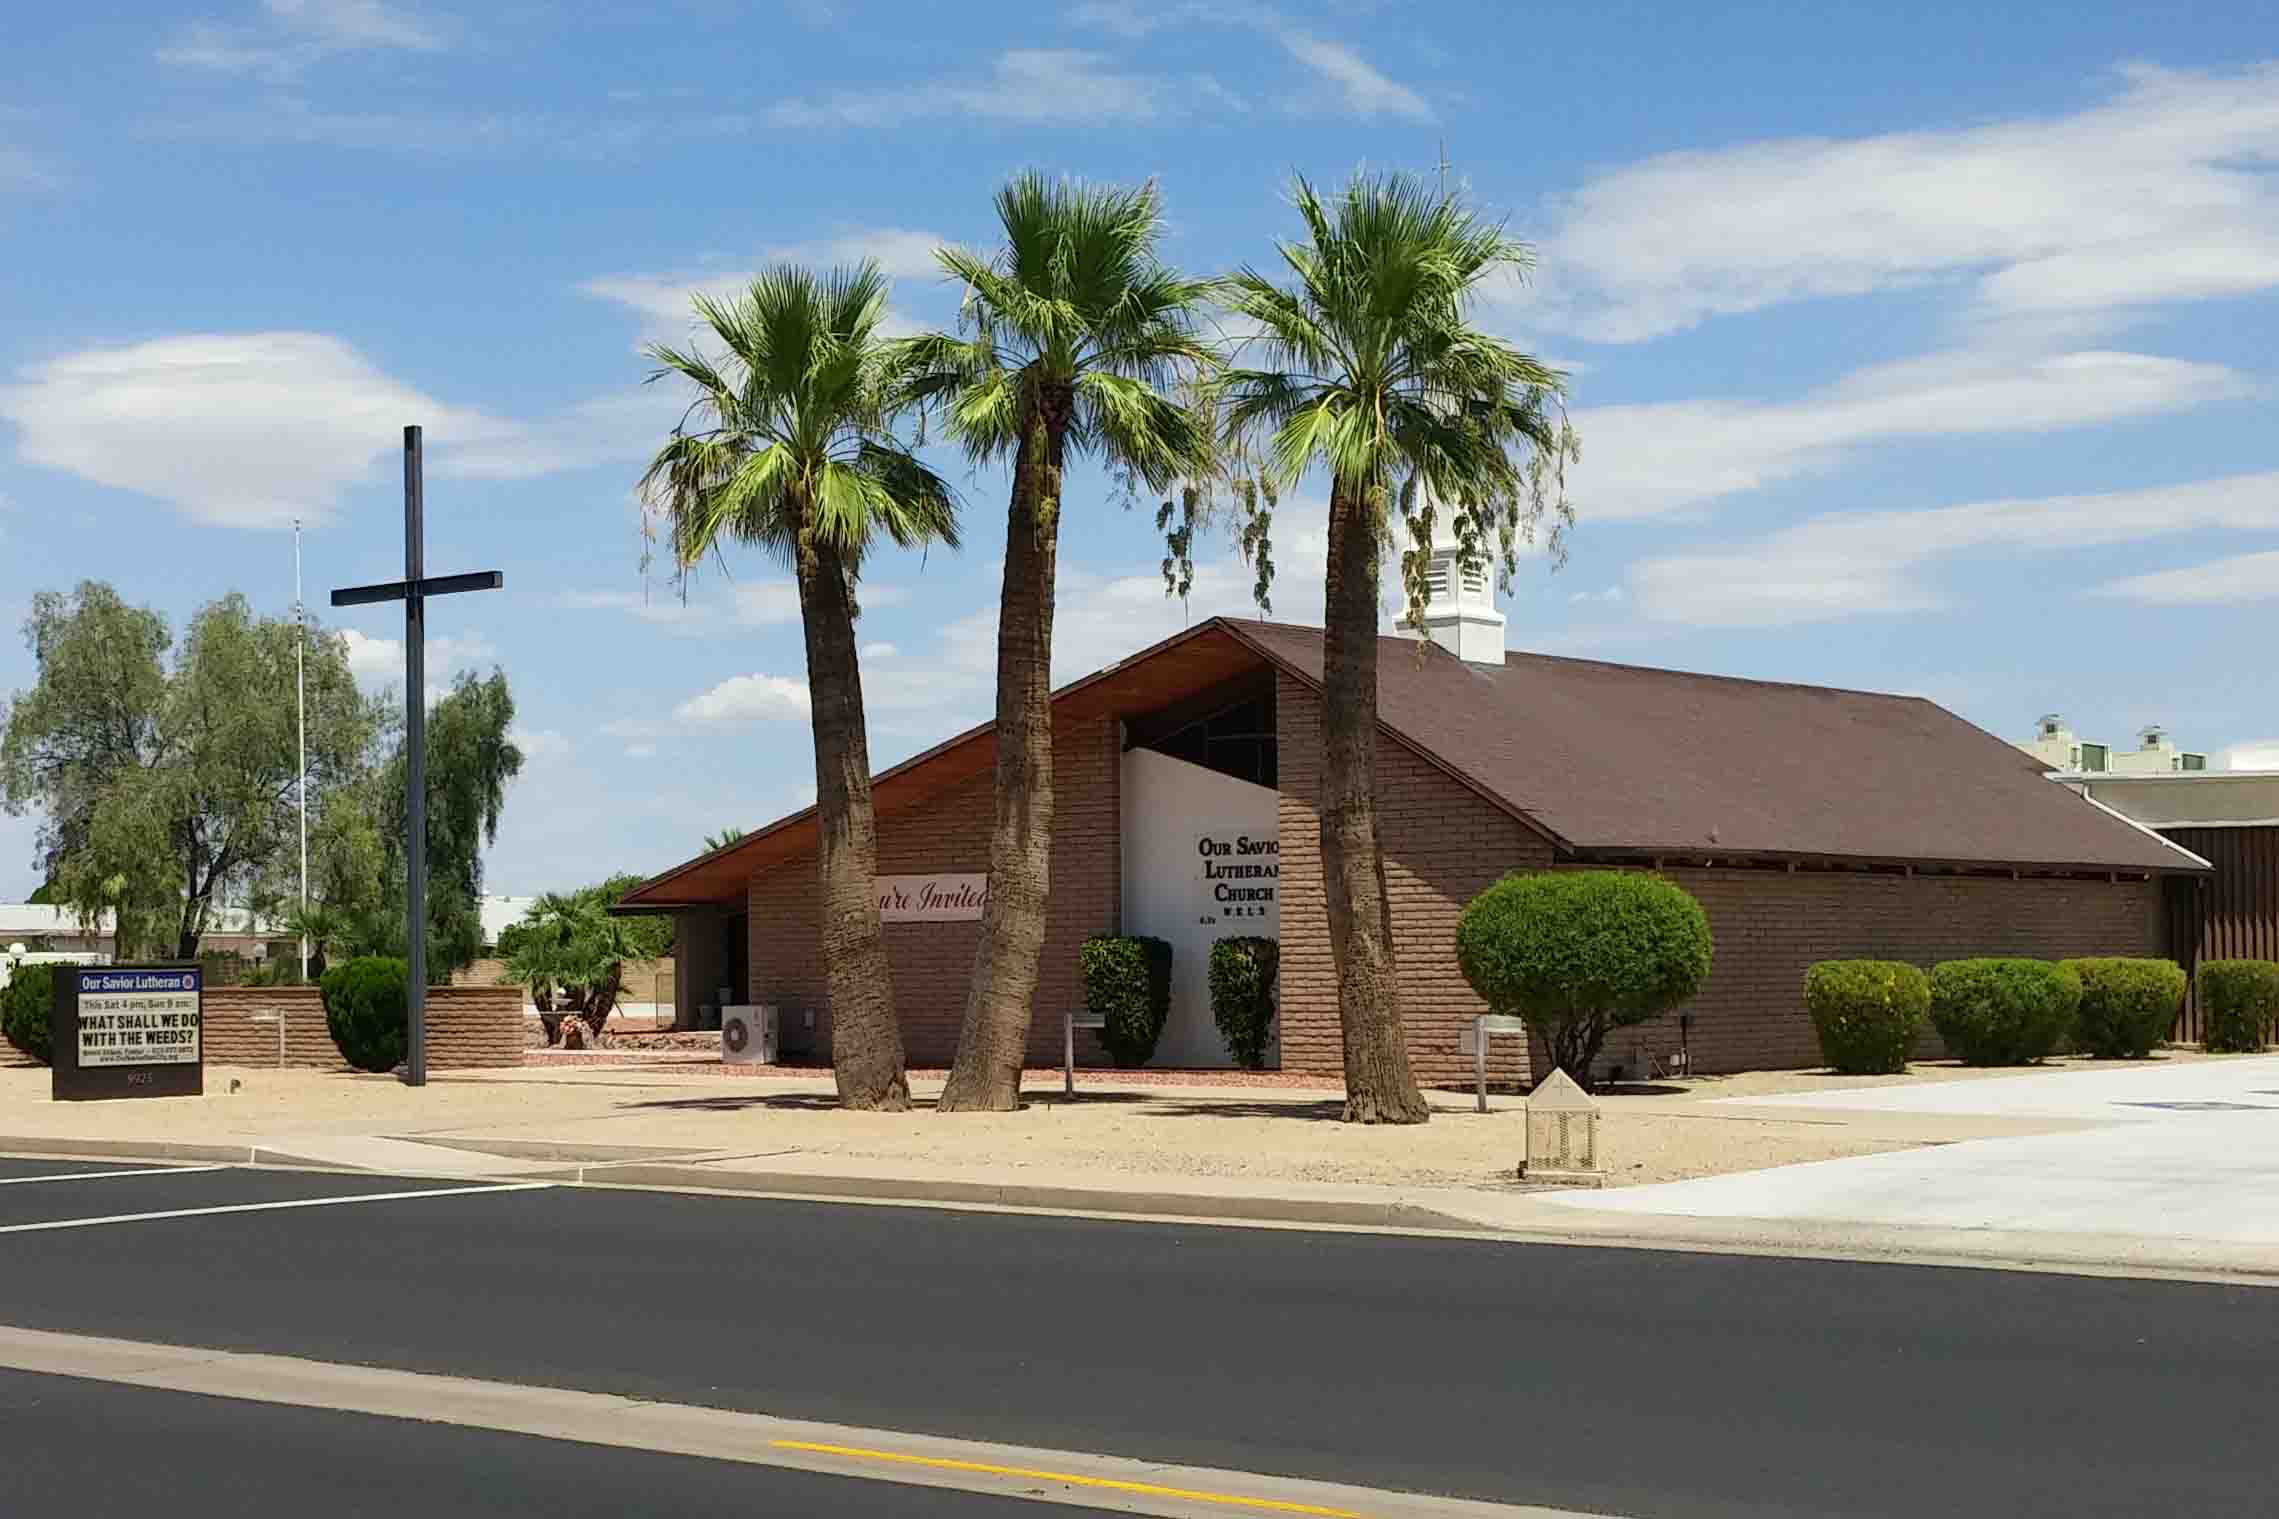 Our Savior, Sun City, AZ (Exterior)